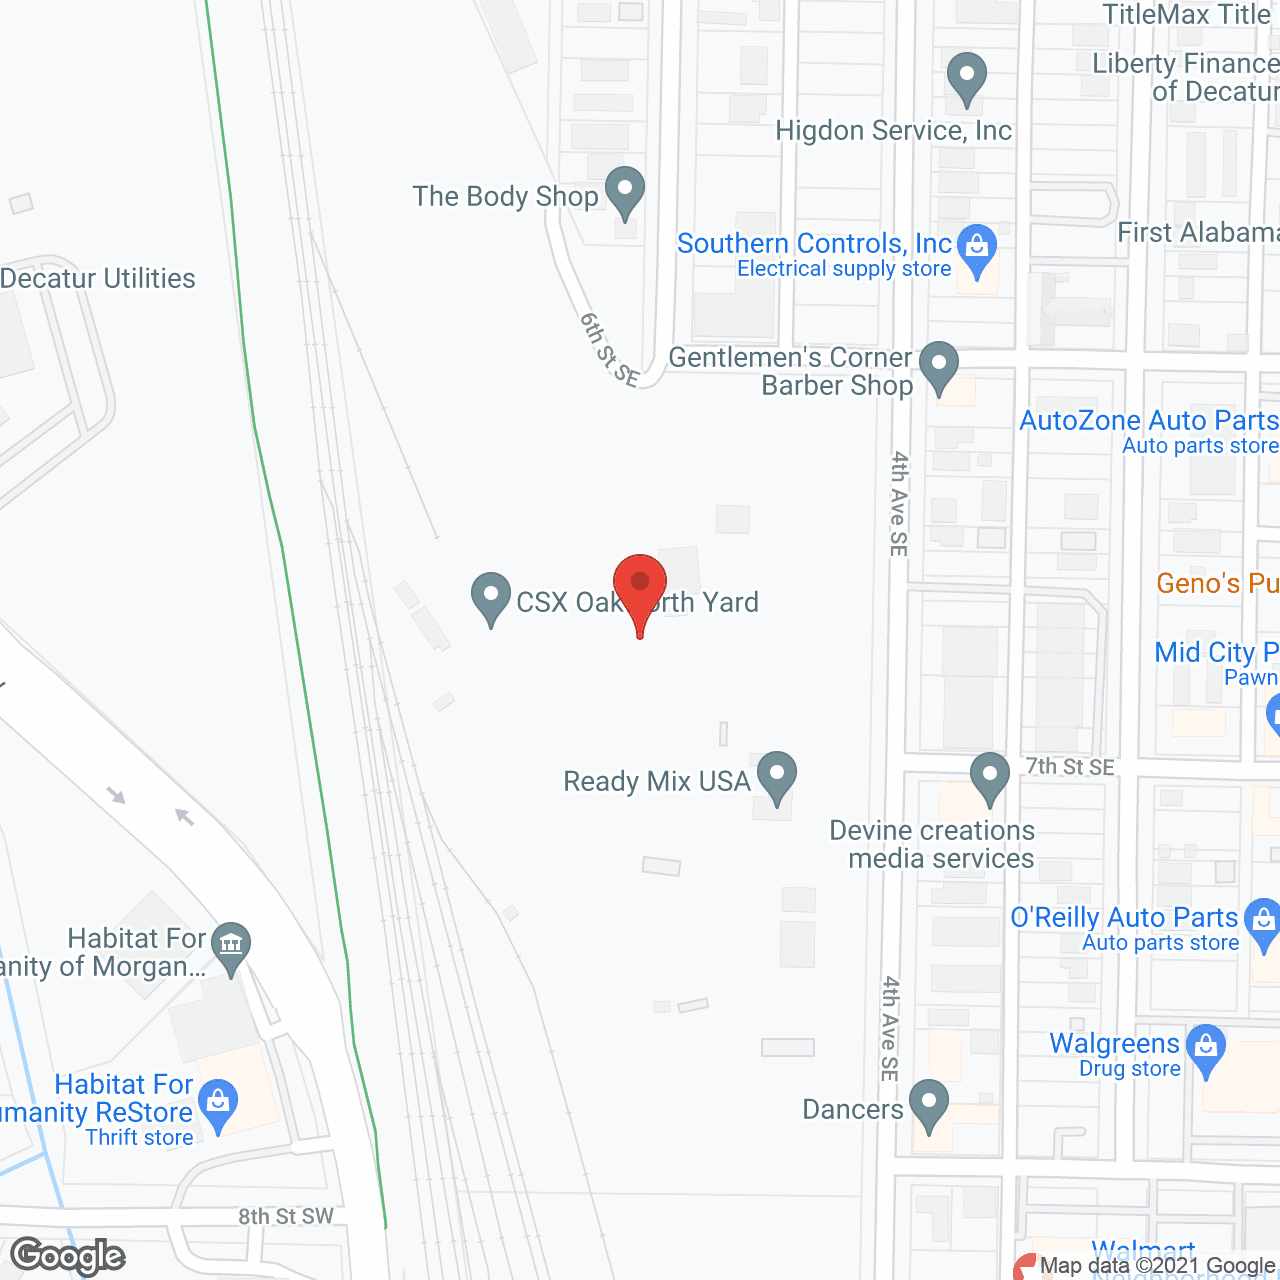 City Center Village in google map